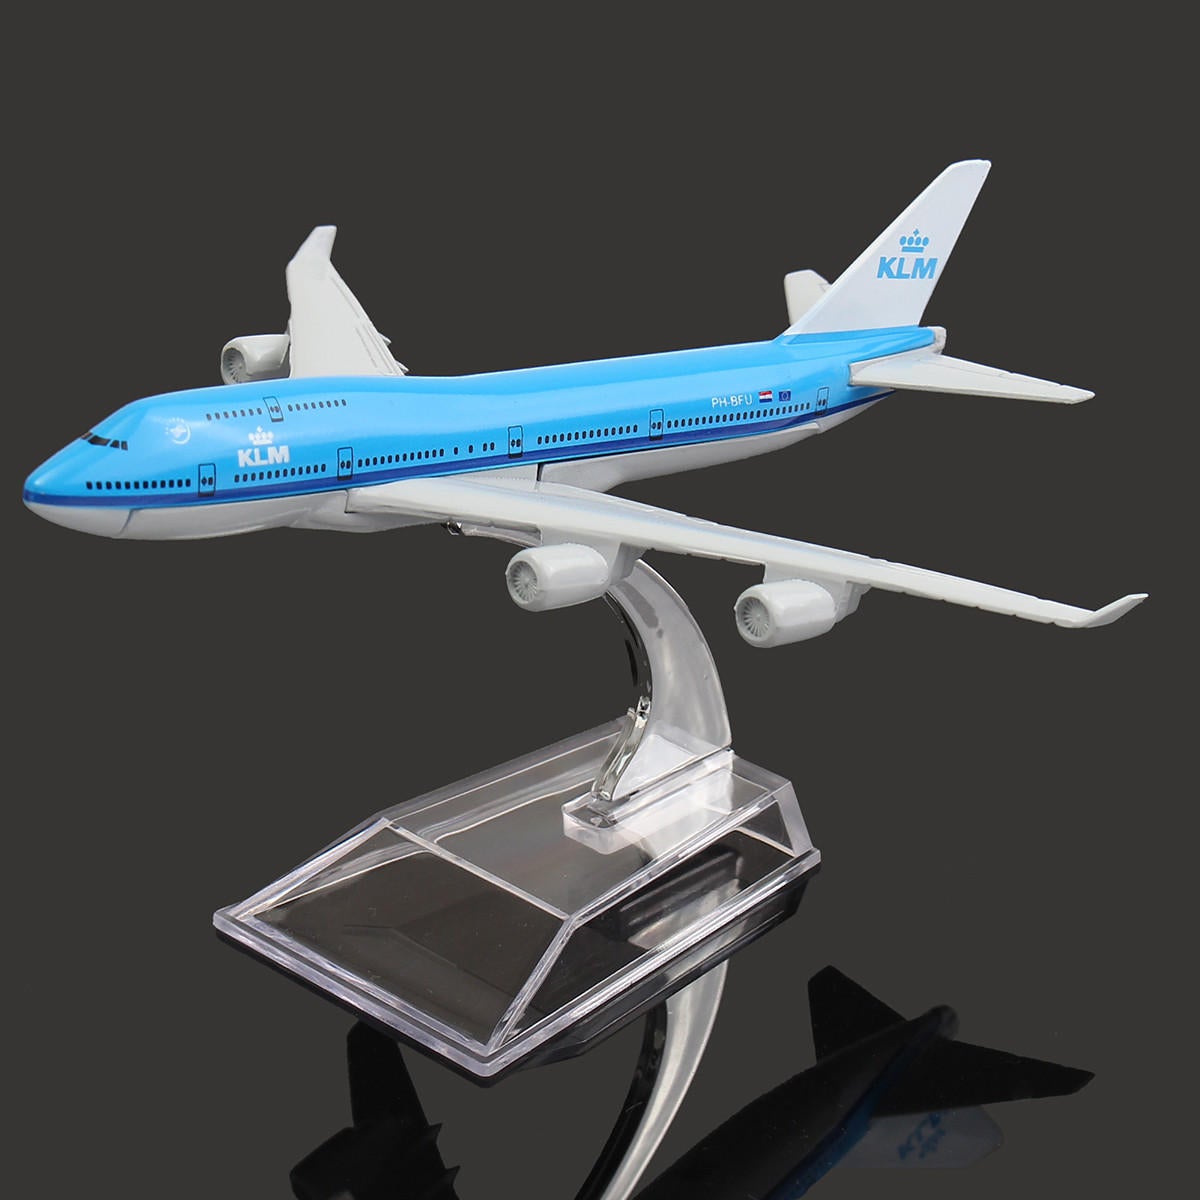 NEW 16cm Airplane Metal Plane Model Aircraft B747 KLM Aeroplane Scale Airplane Desk Toy